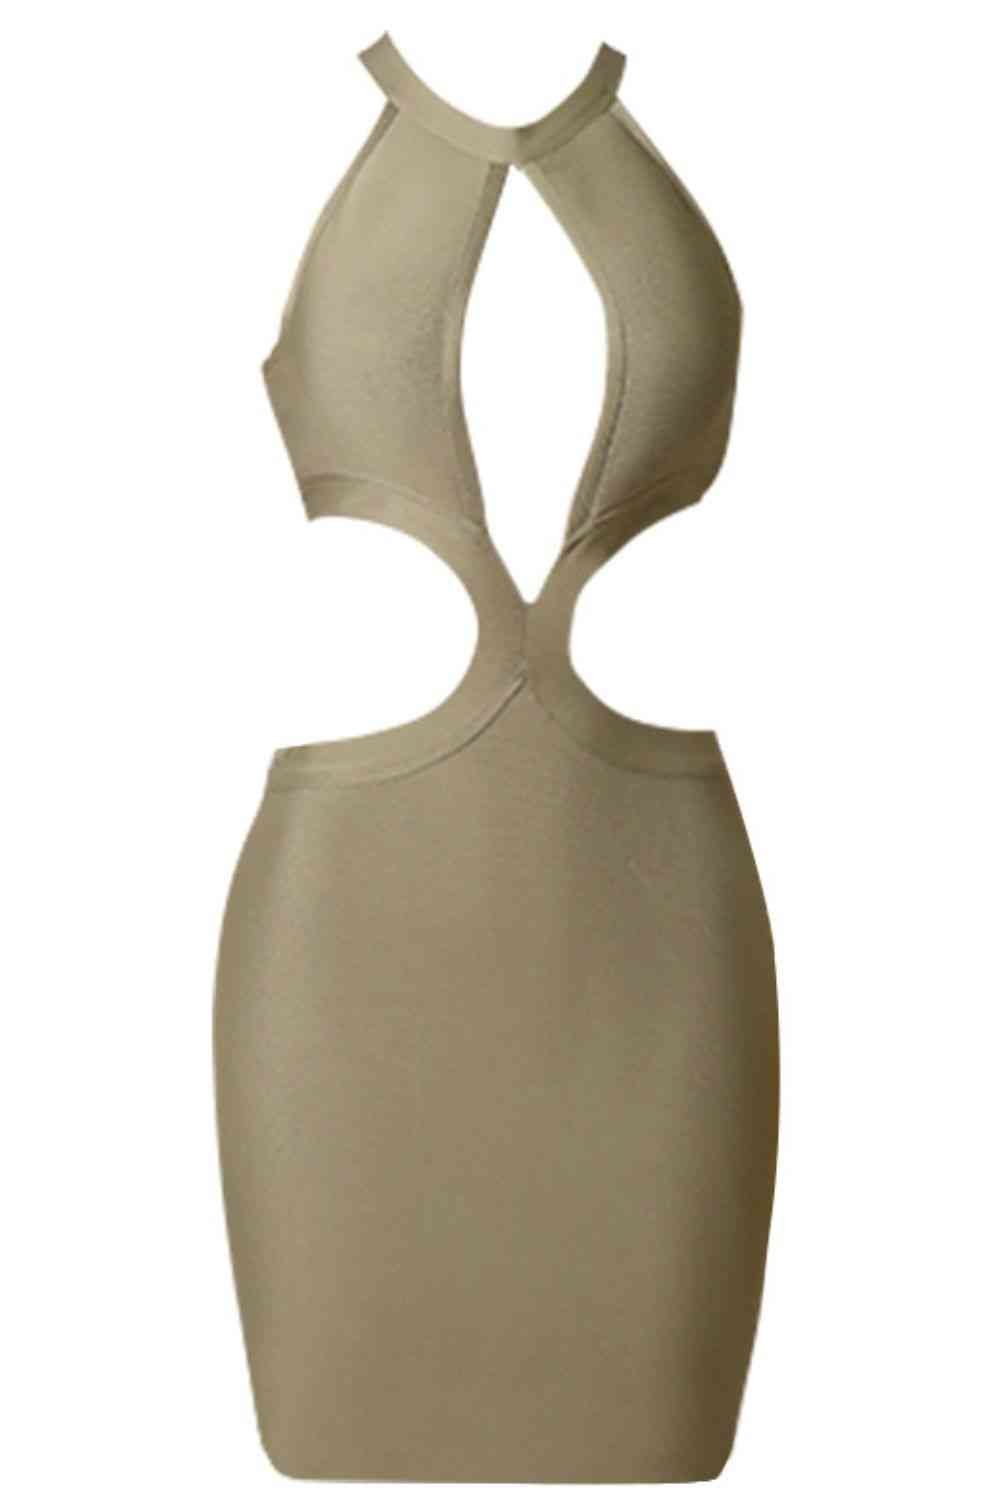 Cutout Grecian Neck Sleeveless Dress - Just Enuff Sexy